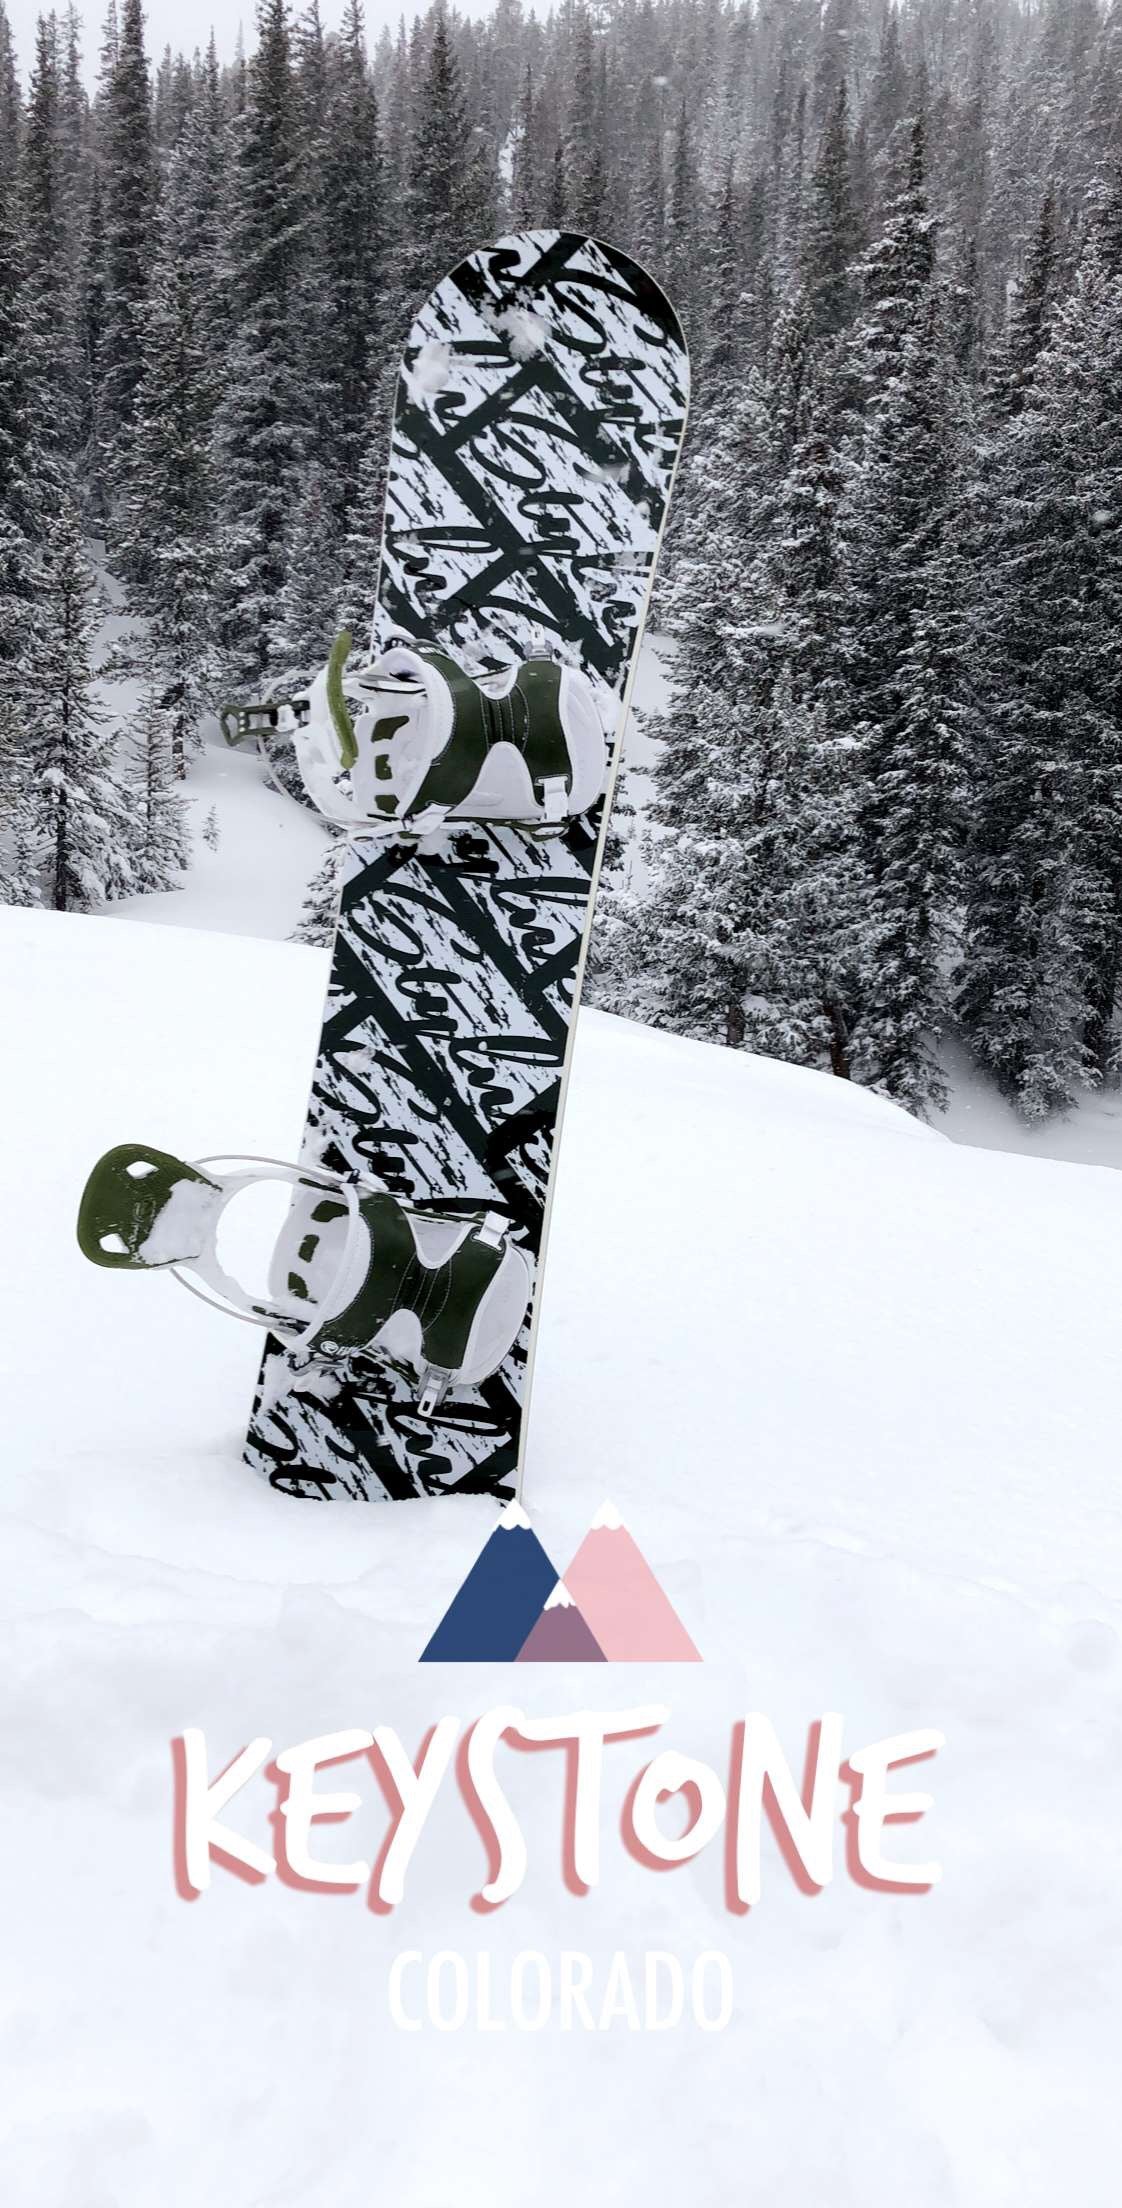 STYLN® 2K19 Snowboard